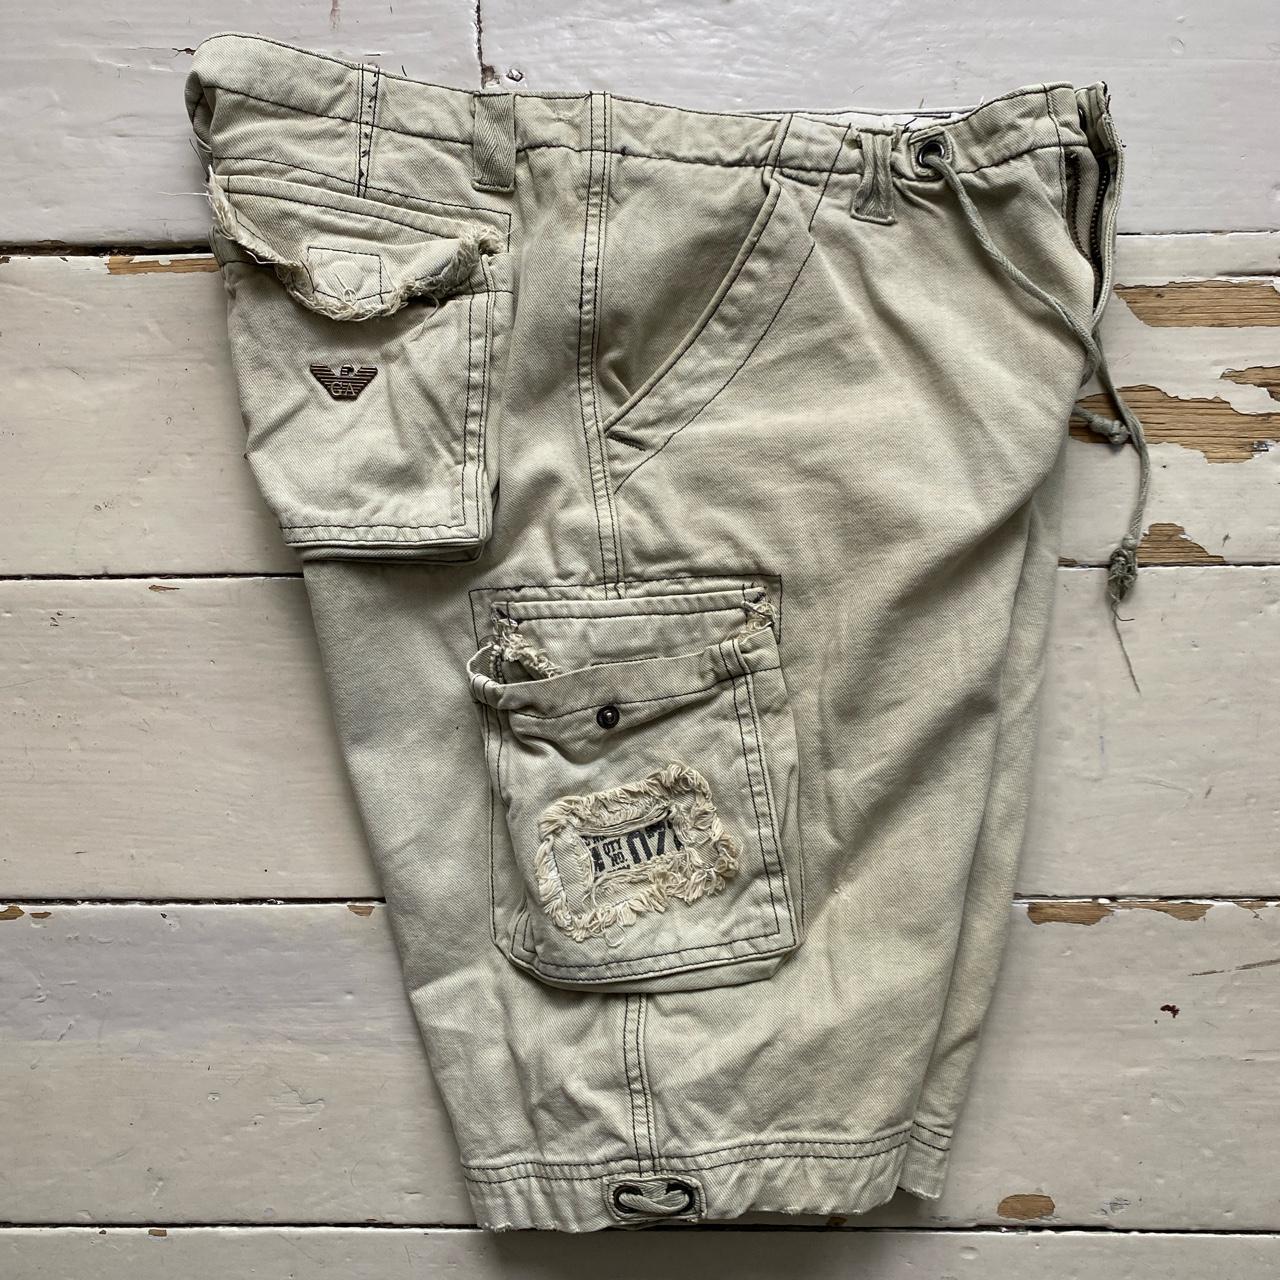 Armani Jeans Vintage Cargo Army Jorts Jean Shorts